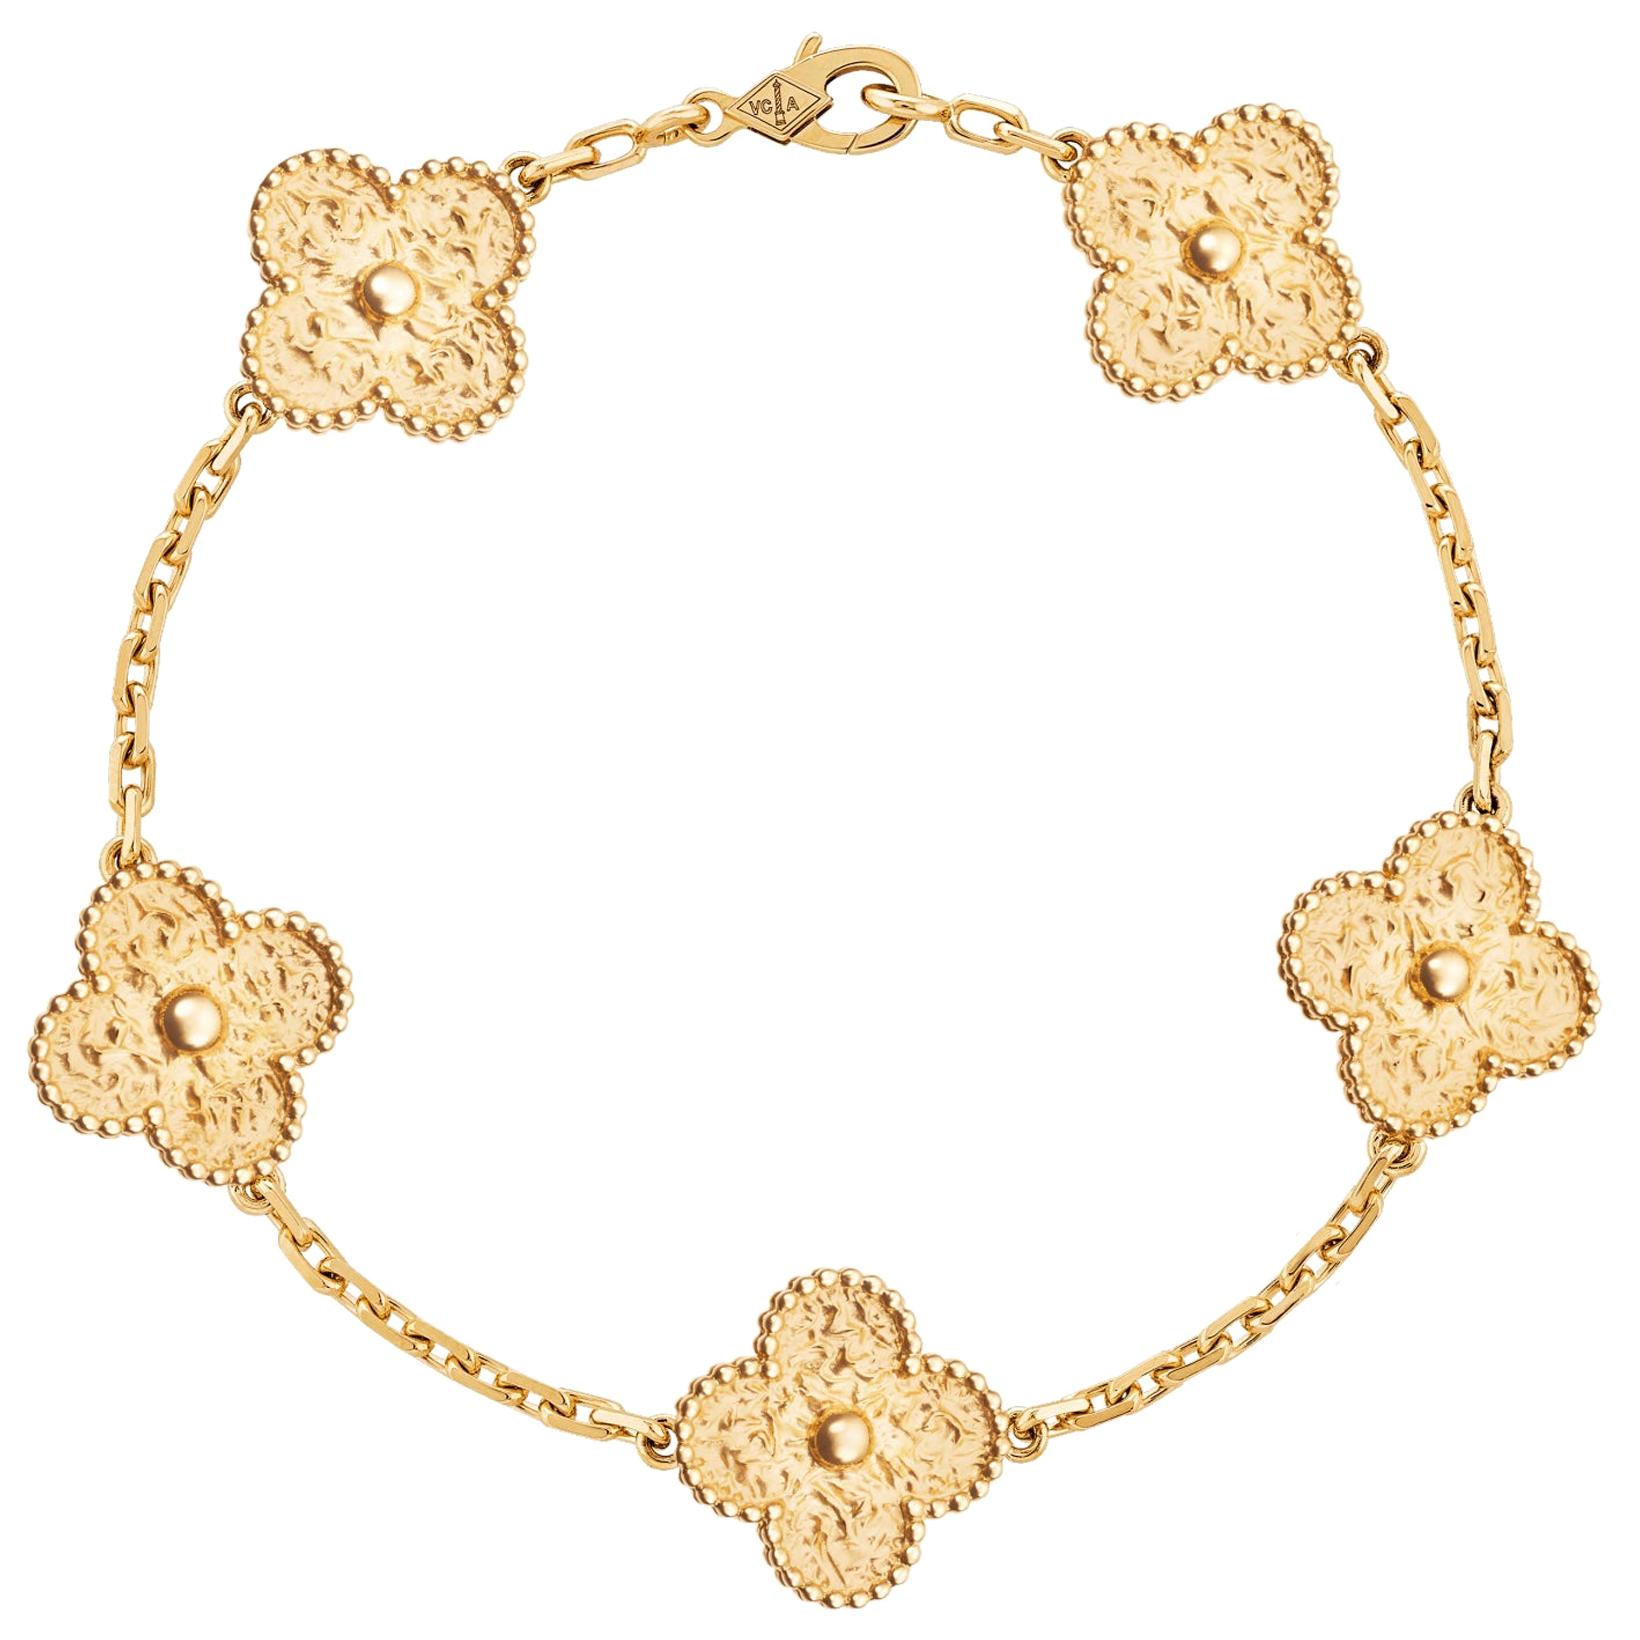 Vintage Alhambra bracelet, 5 motifs 18K yellow gold - Van Cleef